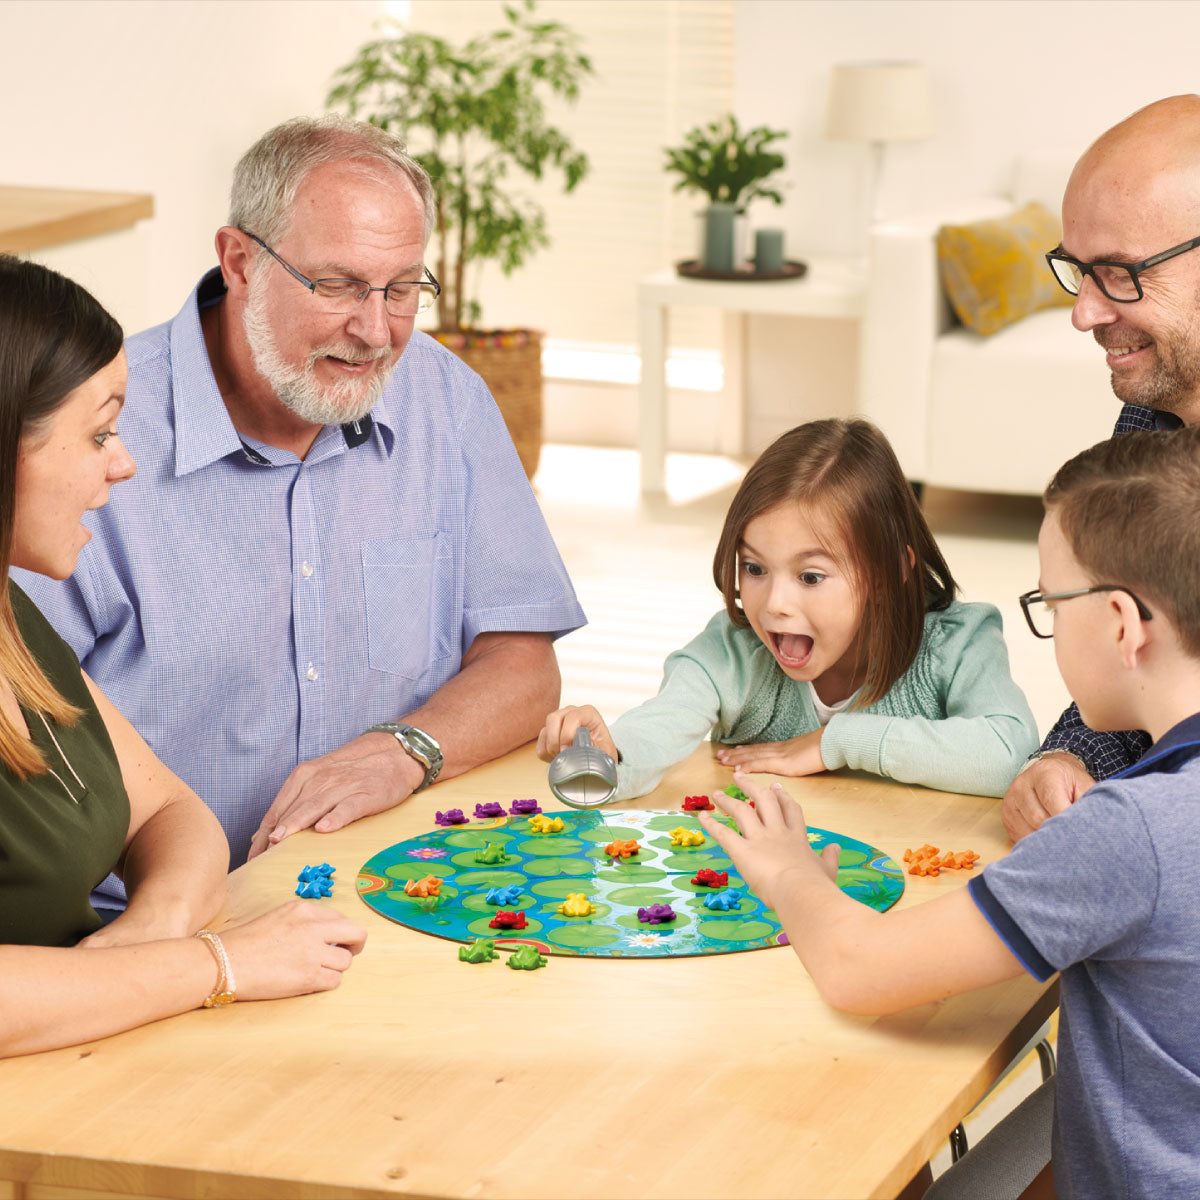 Smart Games Froggit Junior family game